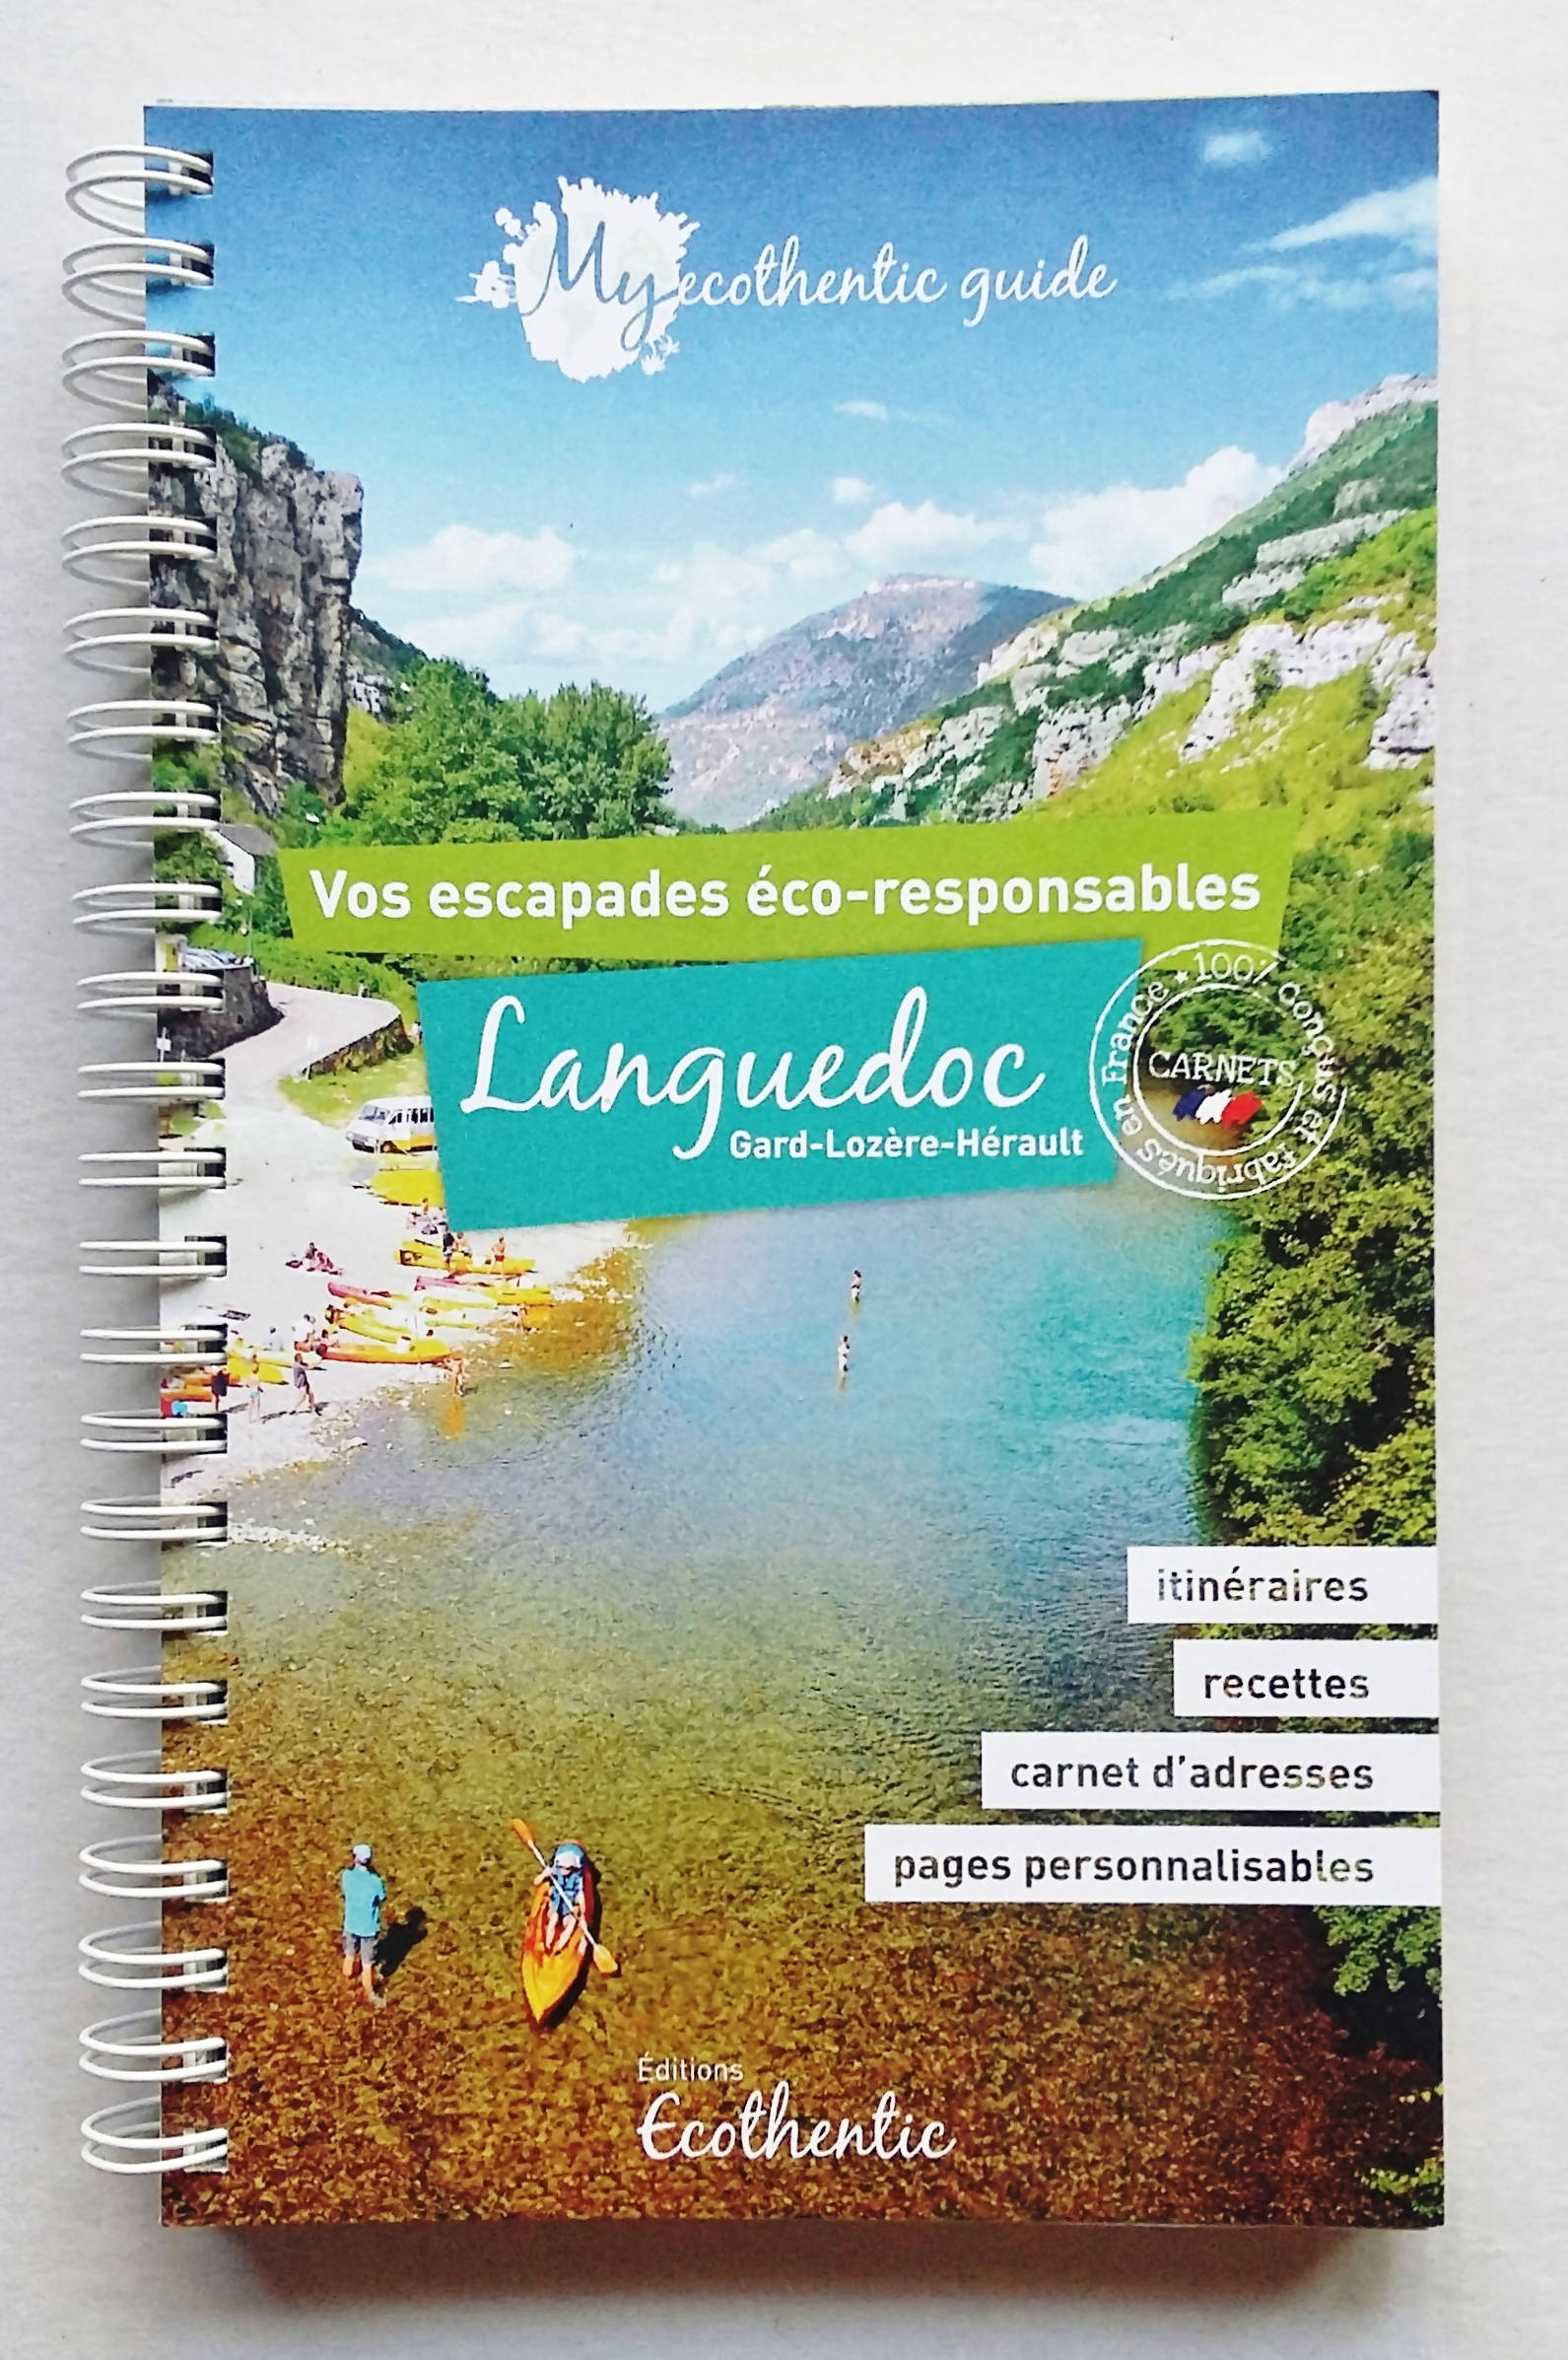 My ecothentic guide Languedoc (Gard, Lozère, Hérault)